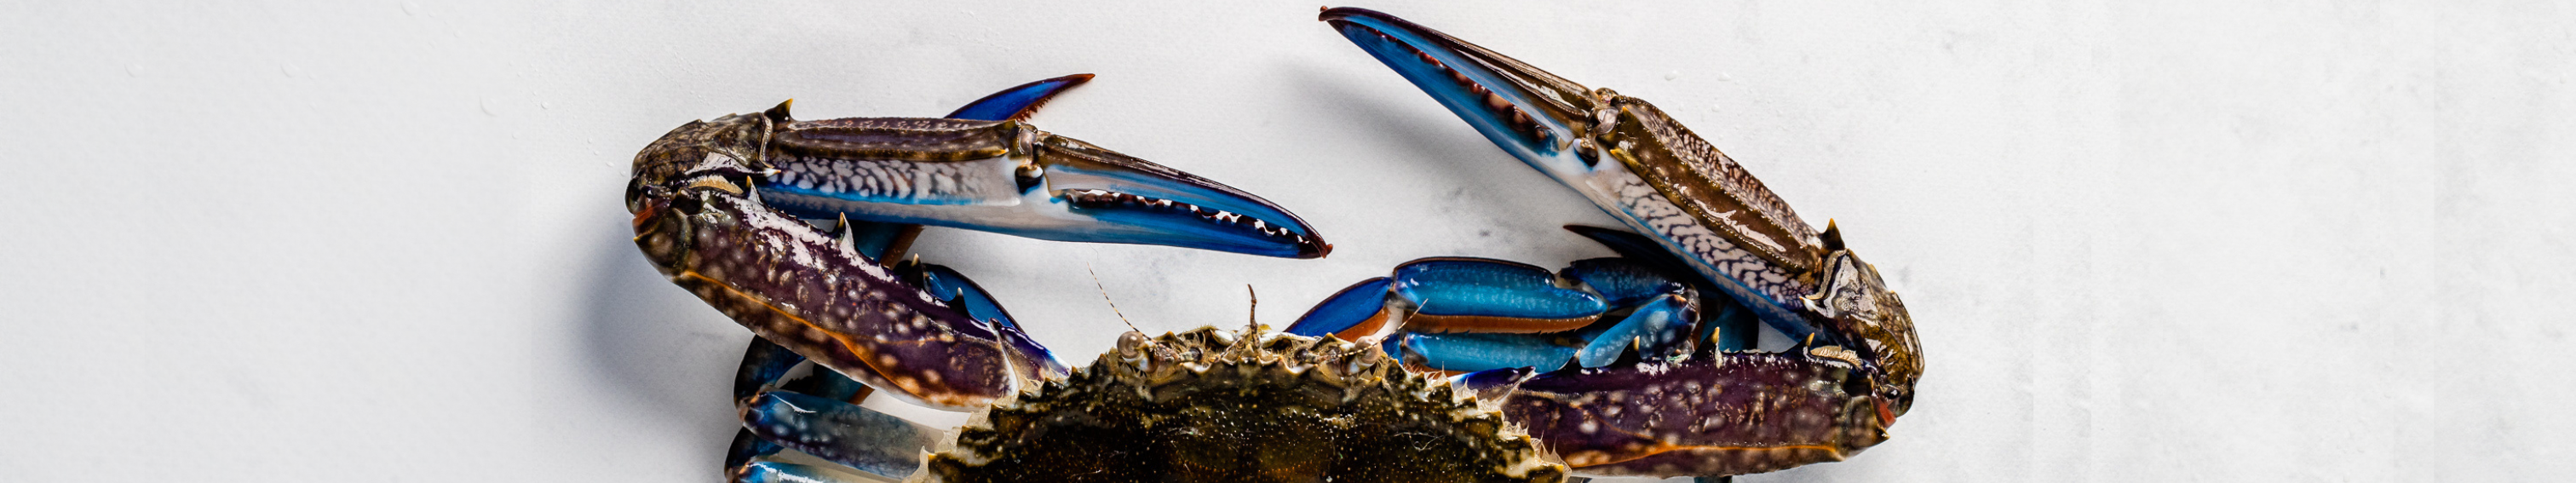 Blue Swimmer crab recipe- Steve Costi's Seafood